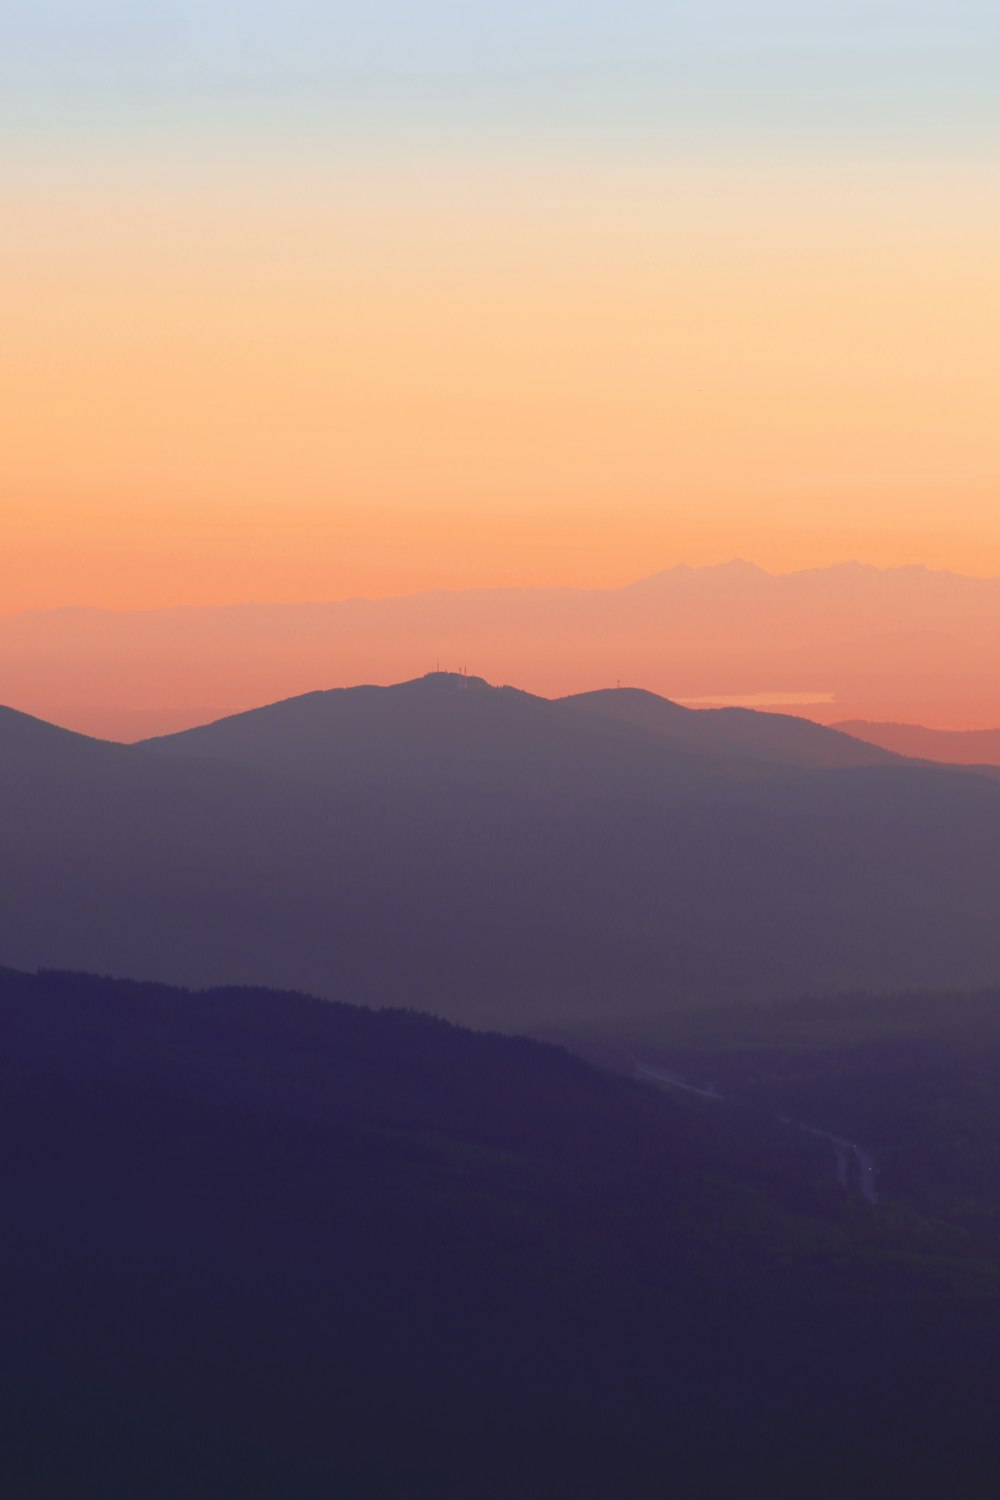 silhouette of mountain photo taken during sunset